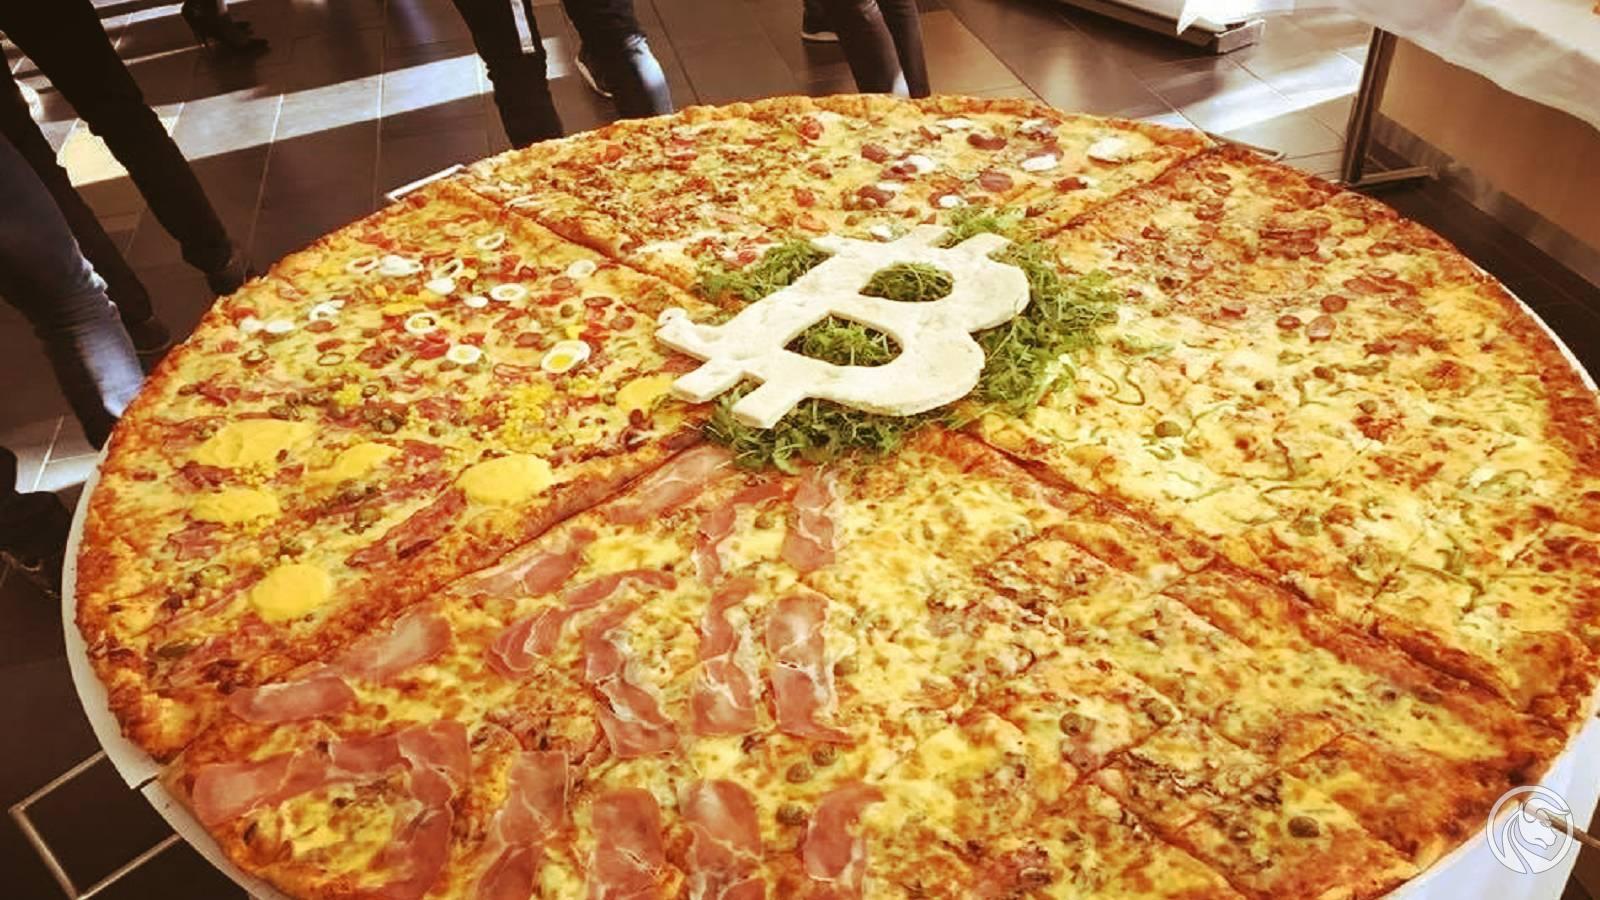 Laszlo Hanyecz bitcoin pizza day